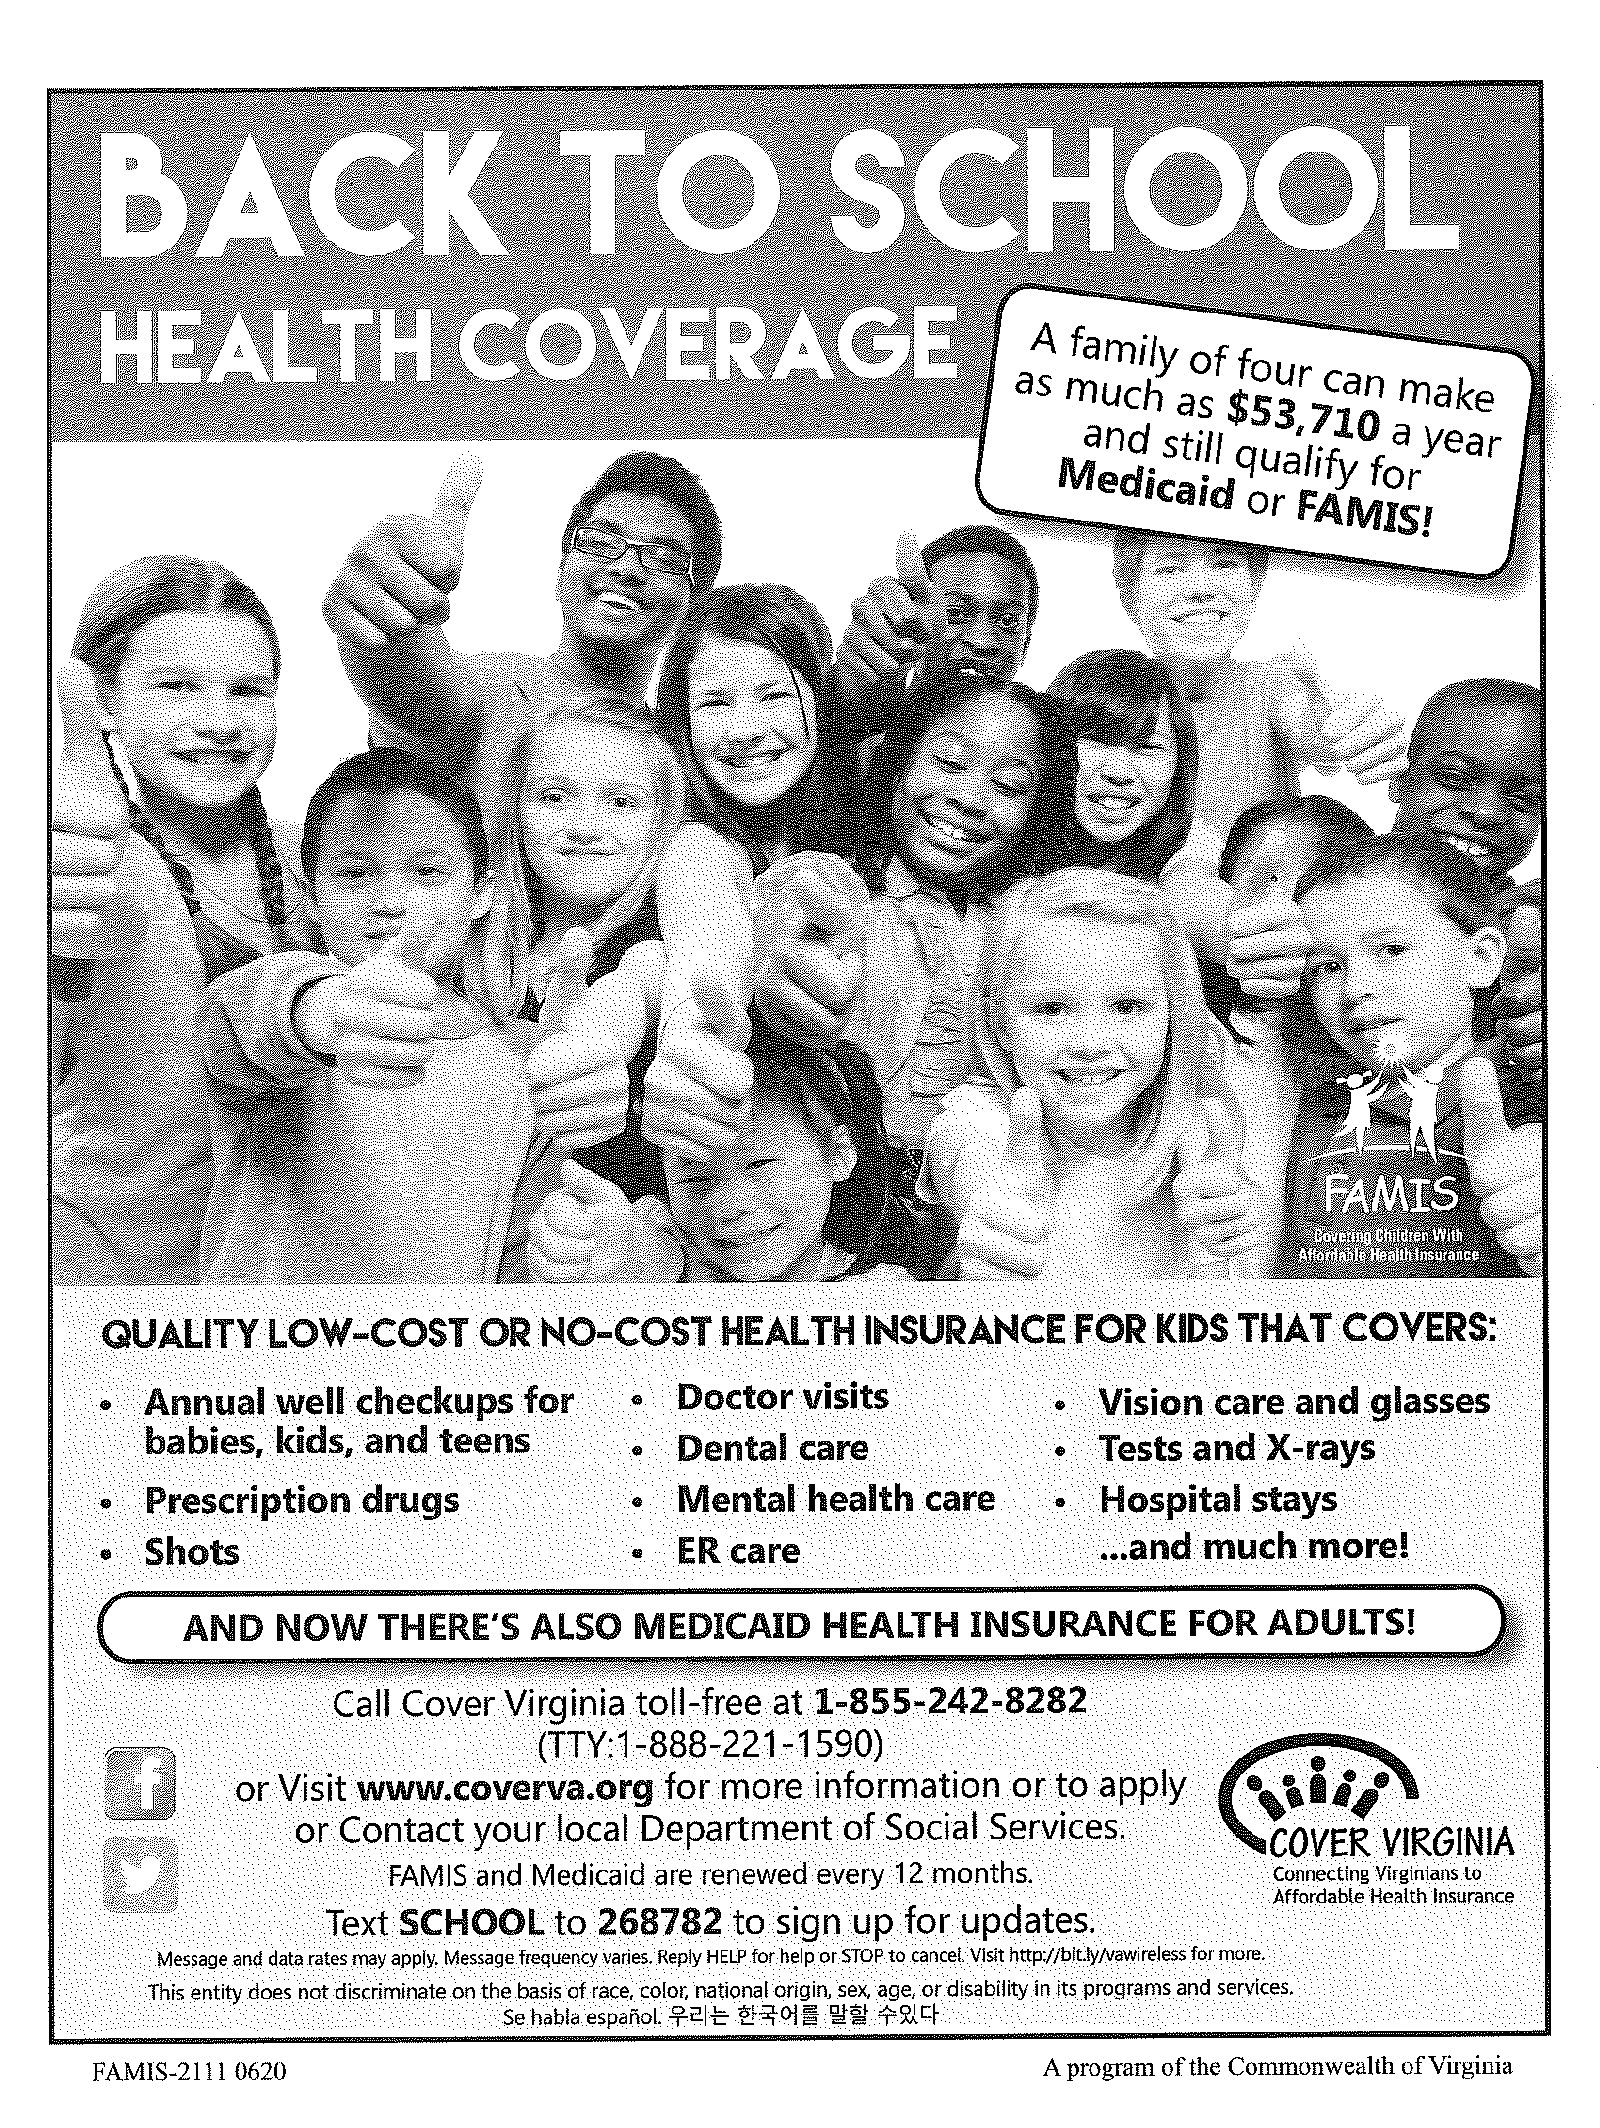 health insurance information flyer